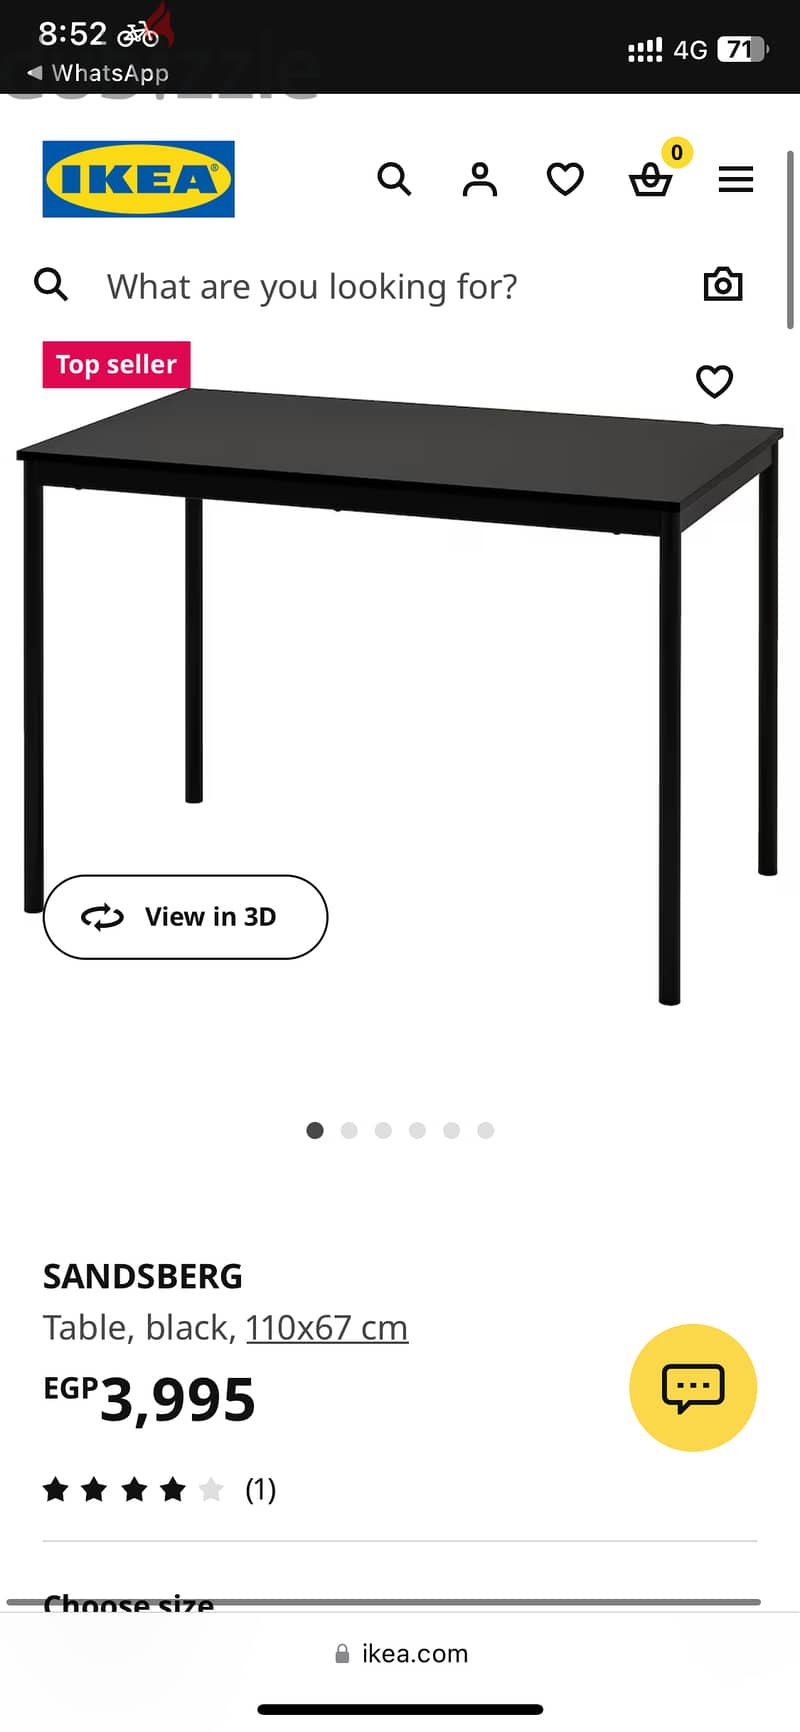 IKEA SANDSBERG Table, black, 110x67 cm 0